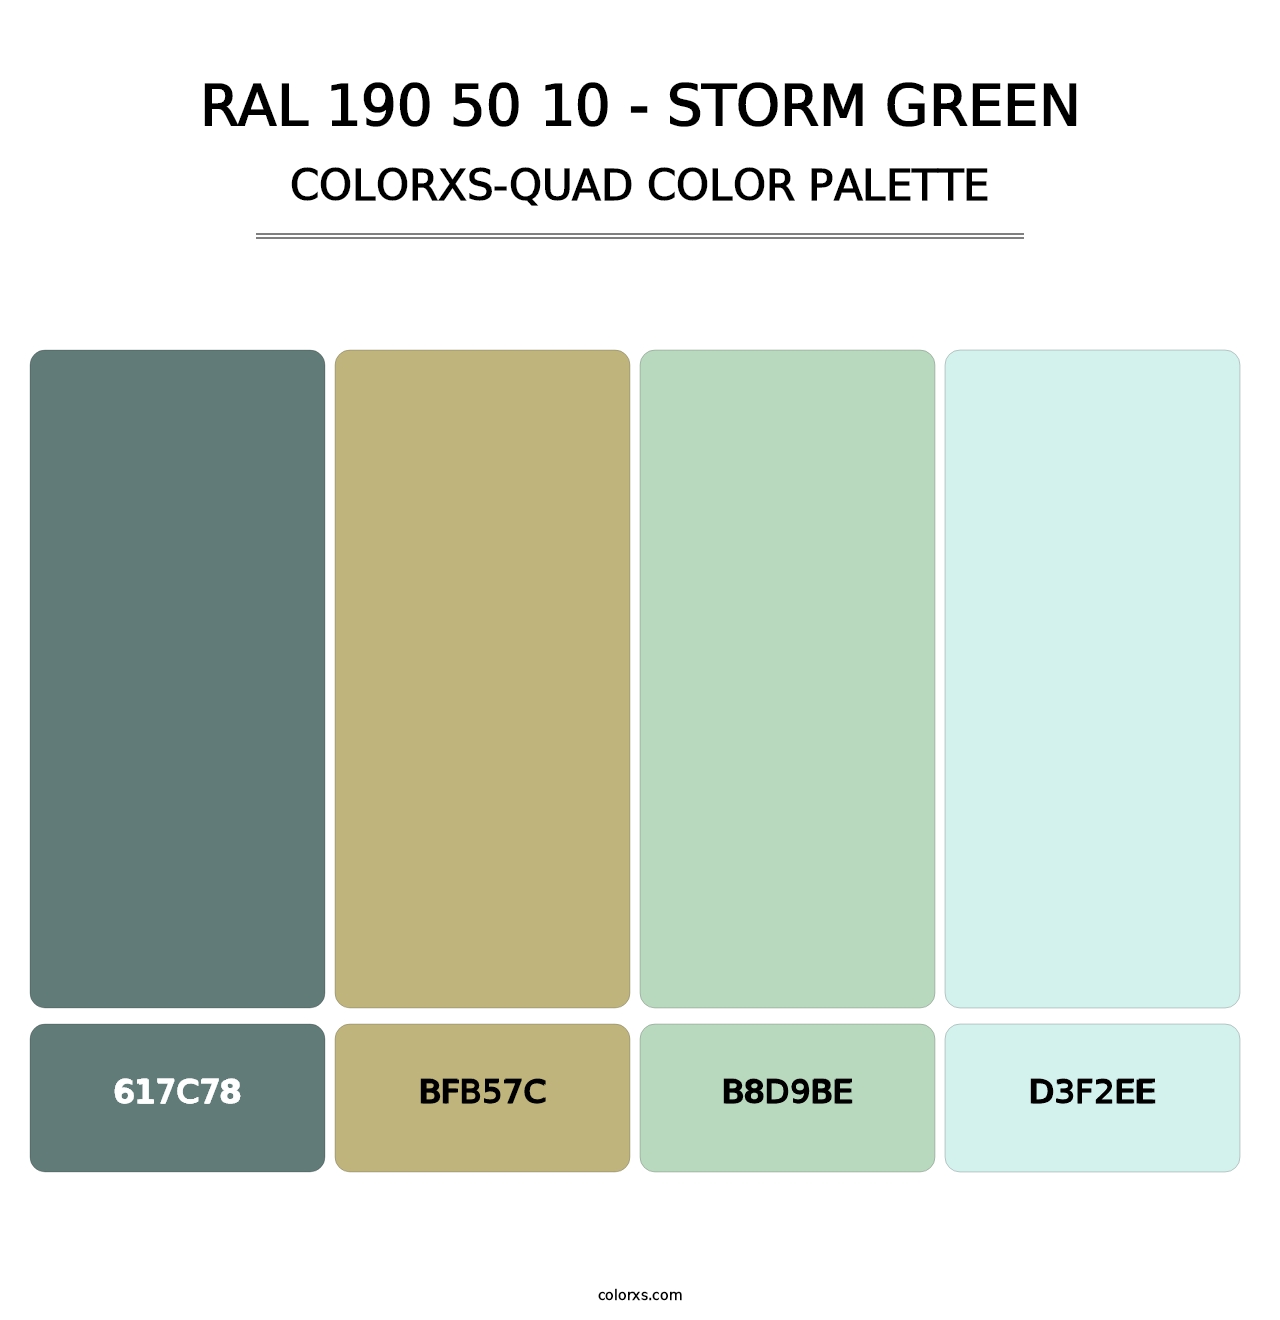 RAL 190 50 10 - Storm Green - Colorxs Quad Palette